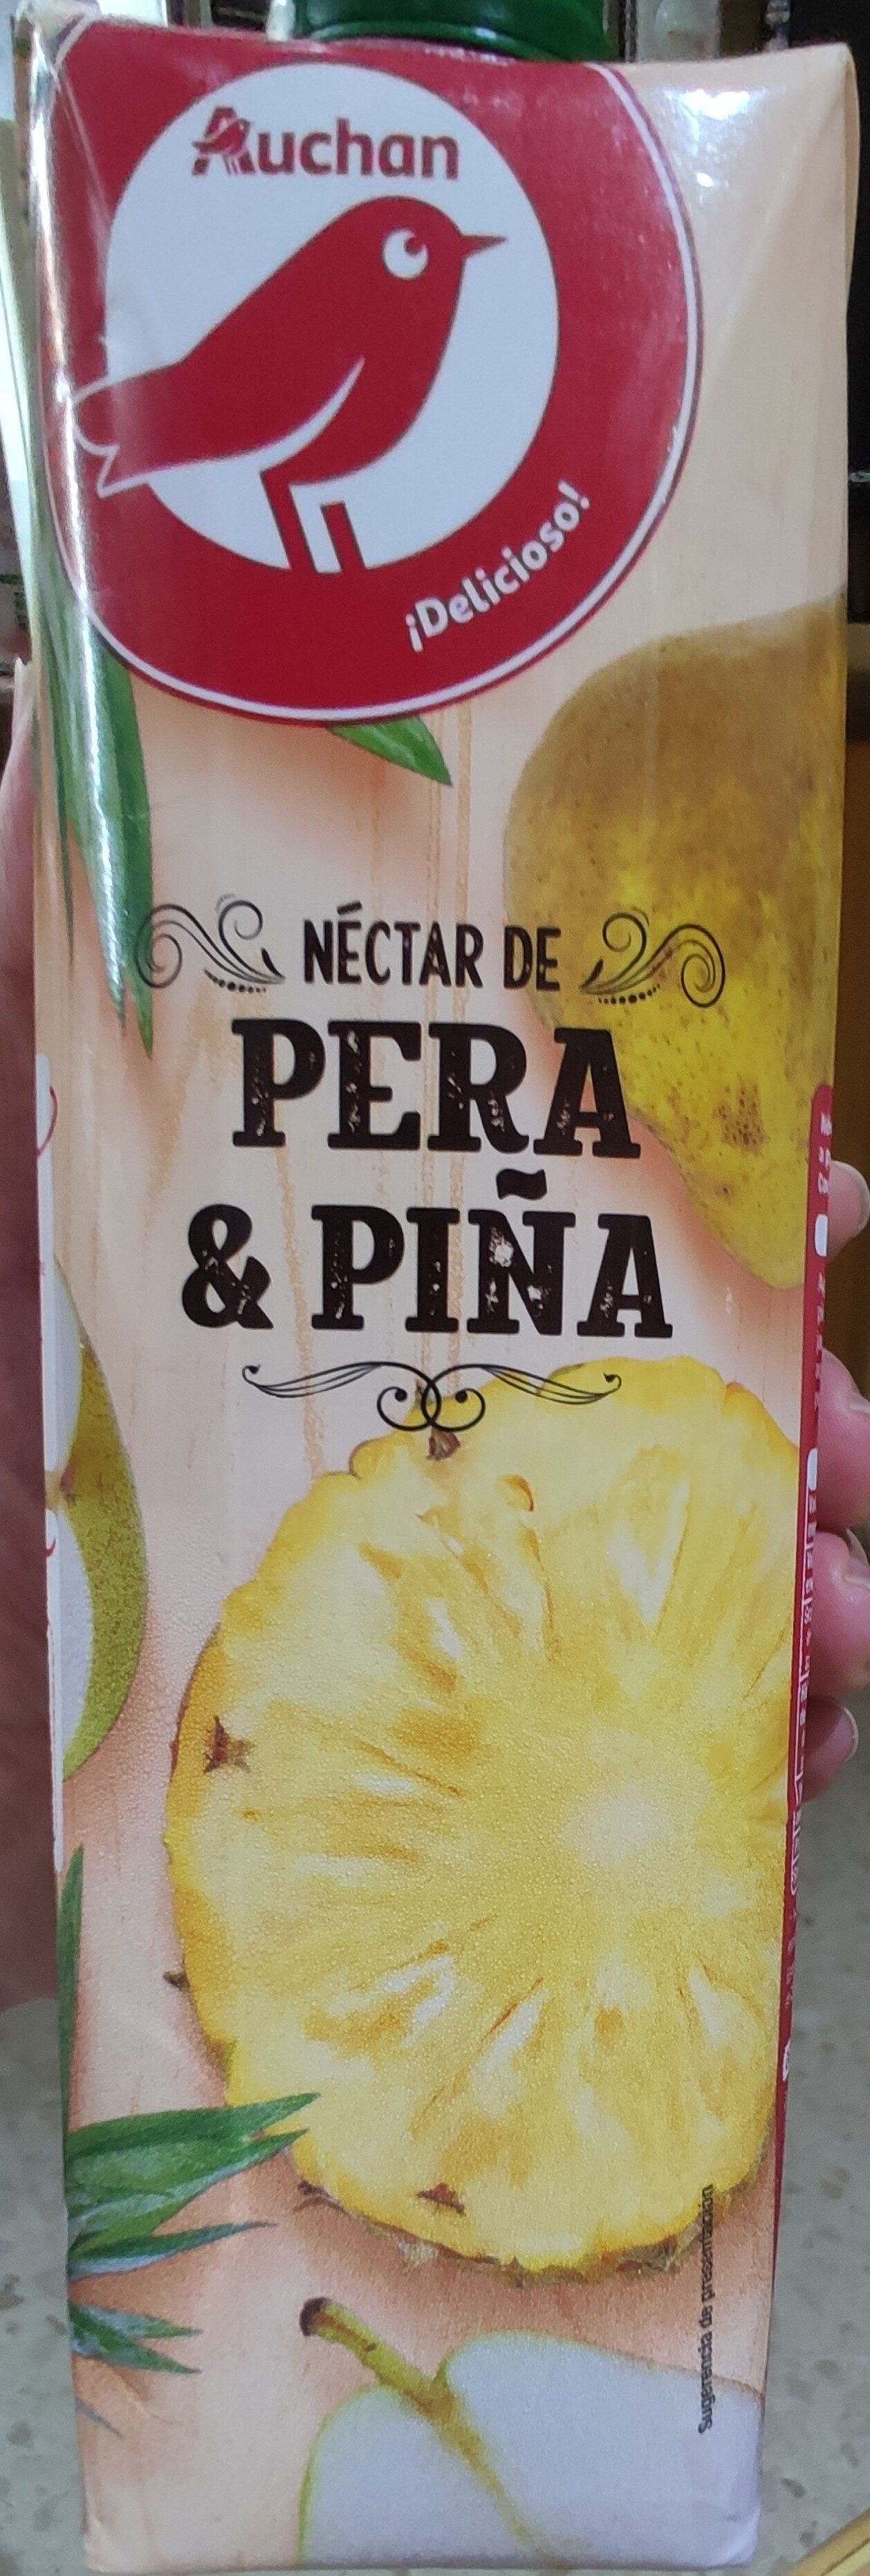 Nectar Pera & Piña - Product - es